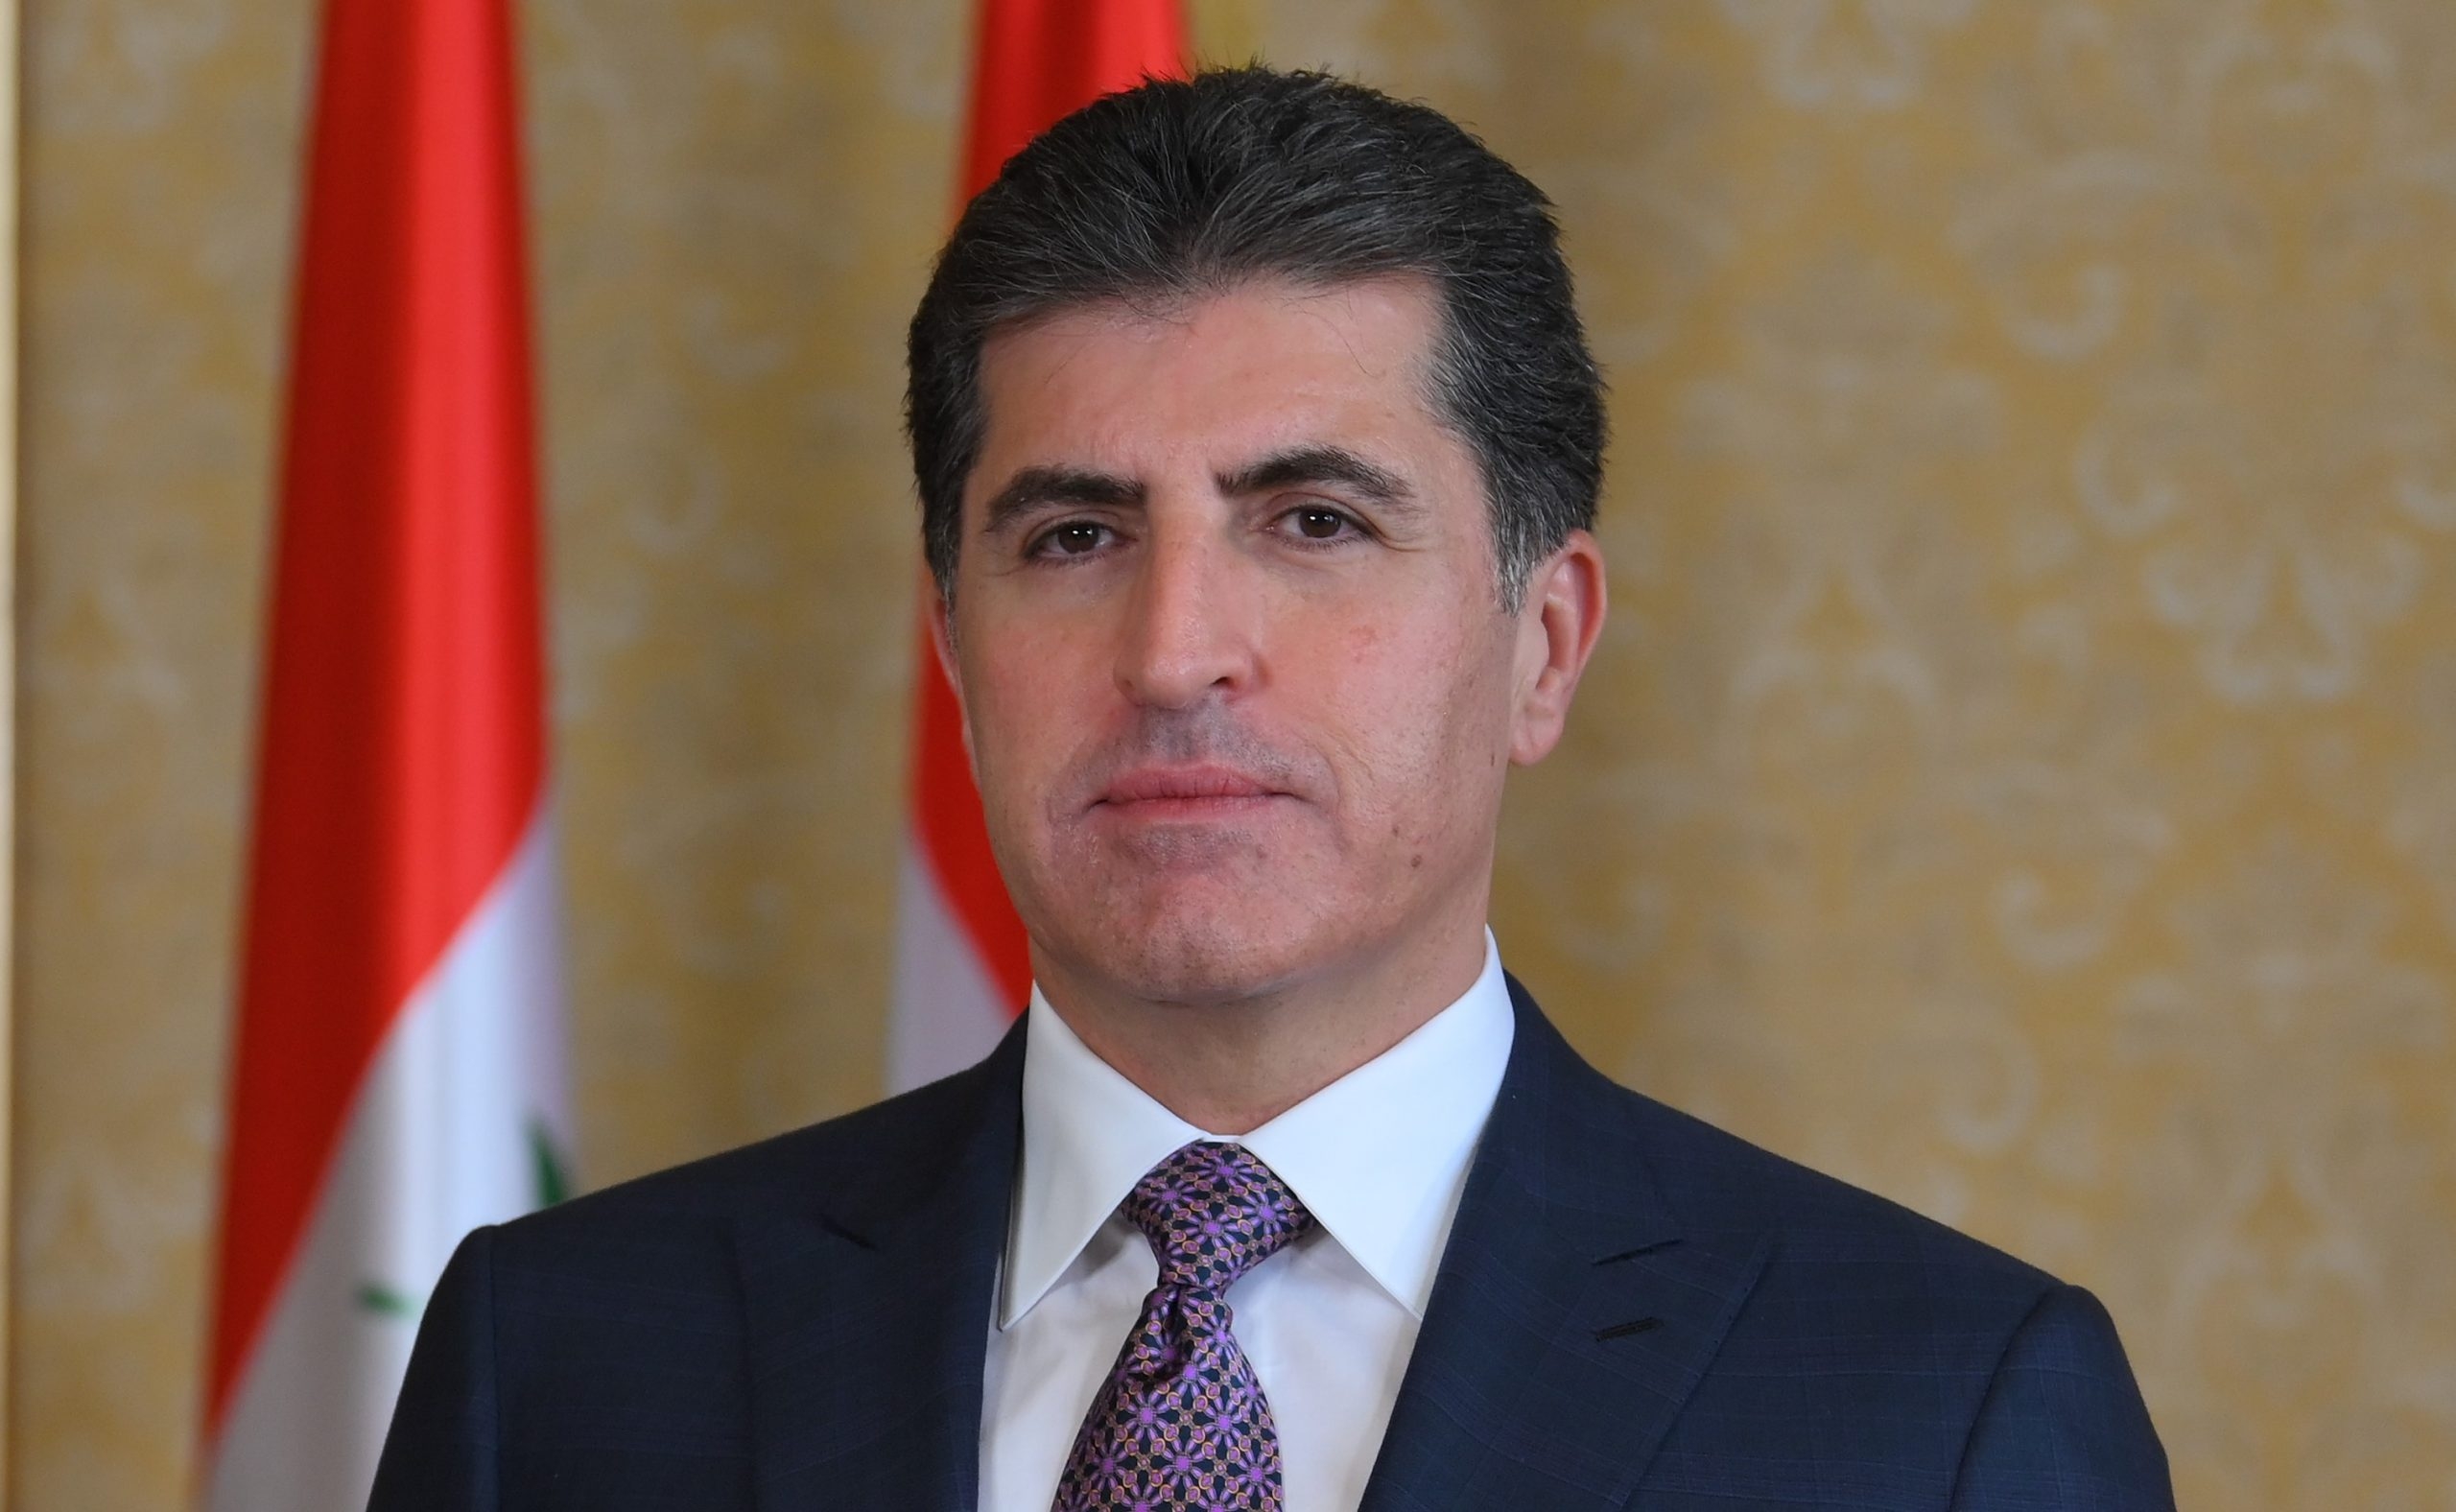 President Nechirvan Barzani offers condolences on the passing of Queen Elizabeth II